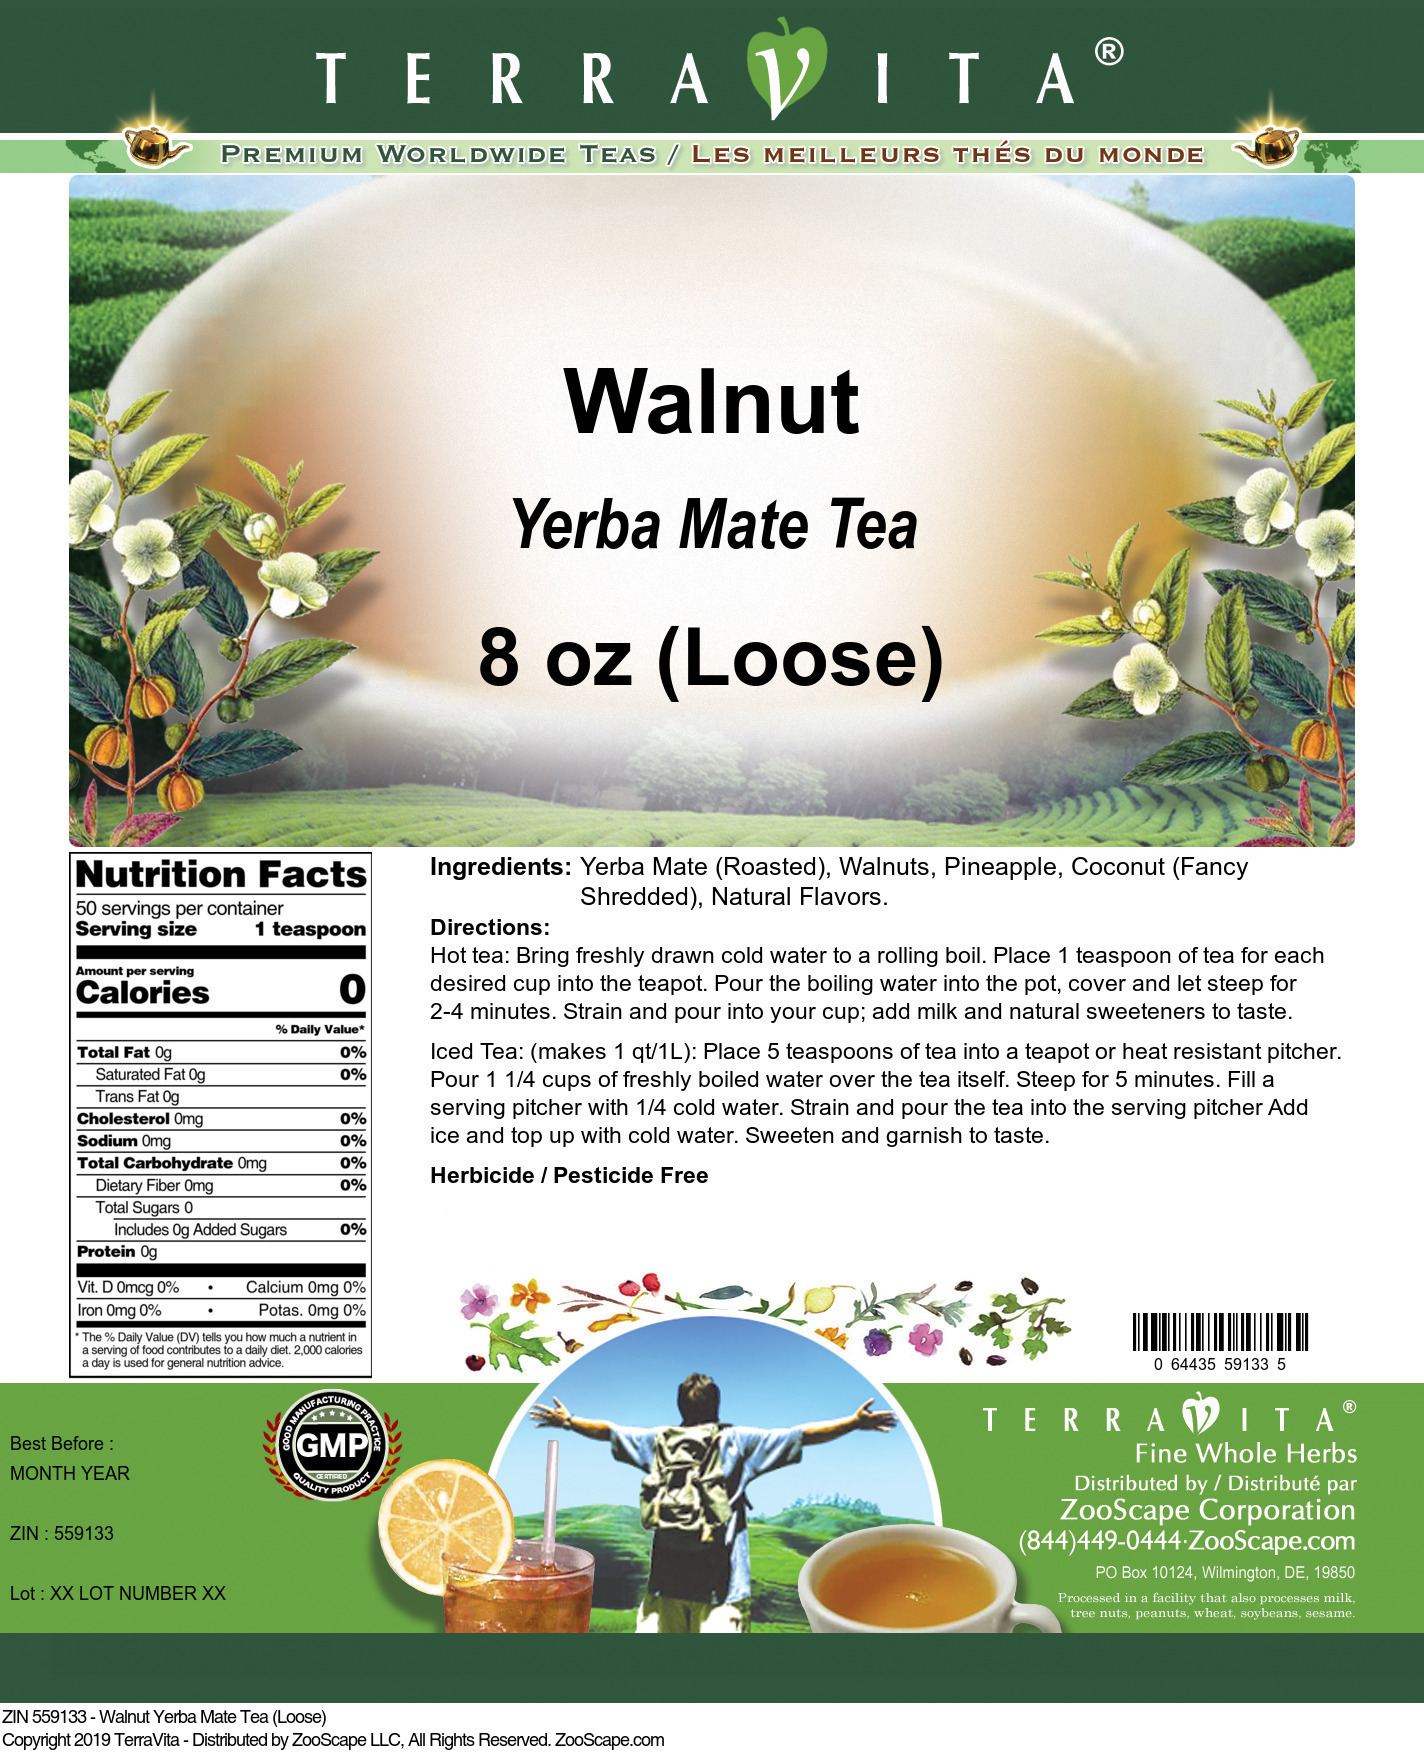 Walnut Yerba Mate Tea (Loose) - Label